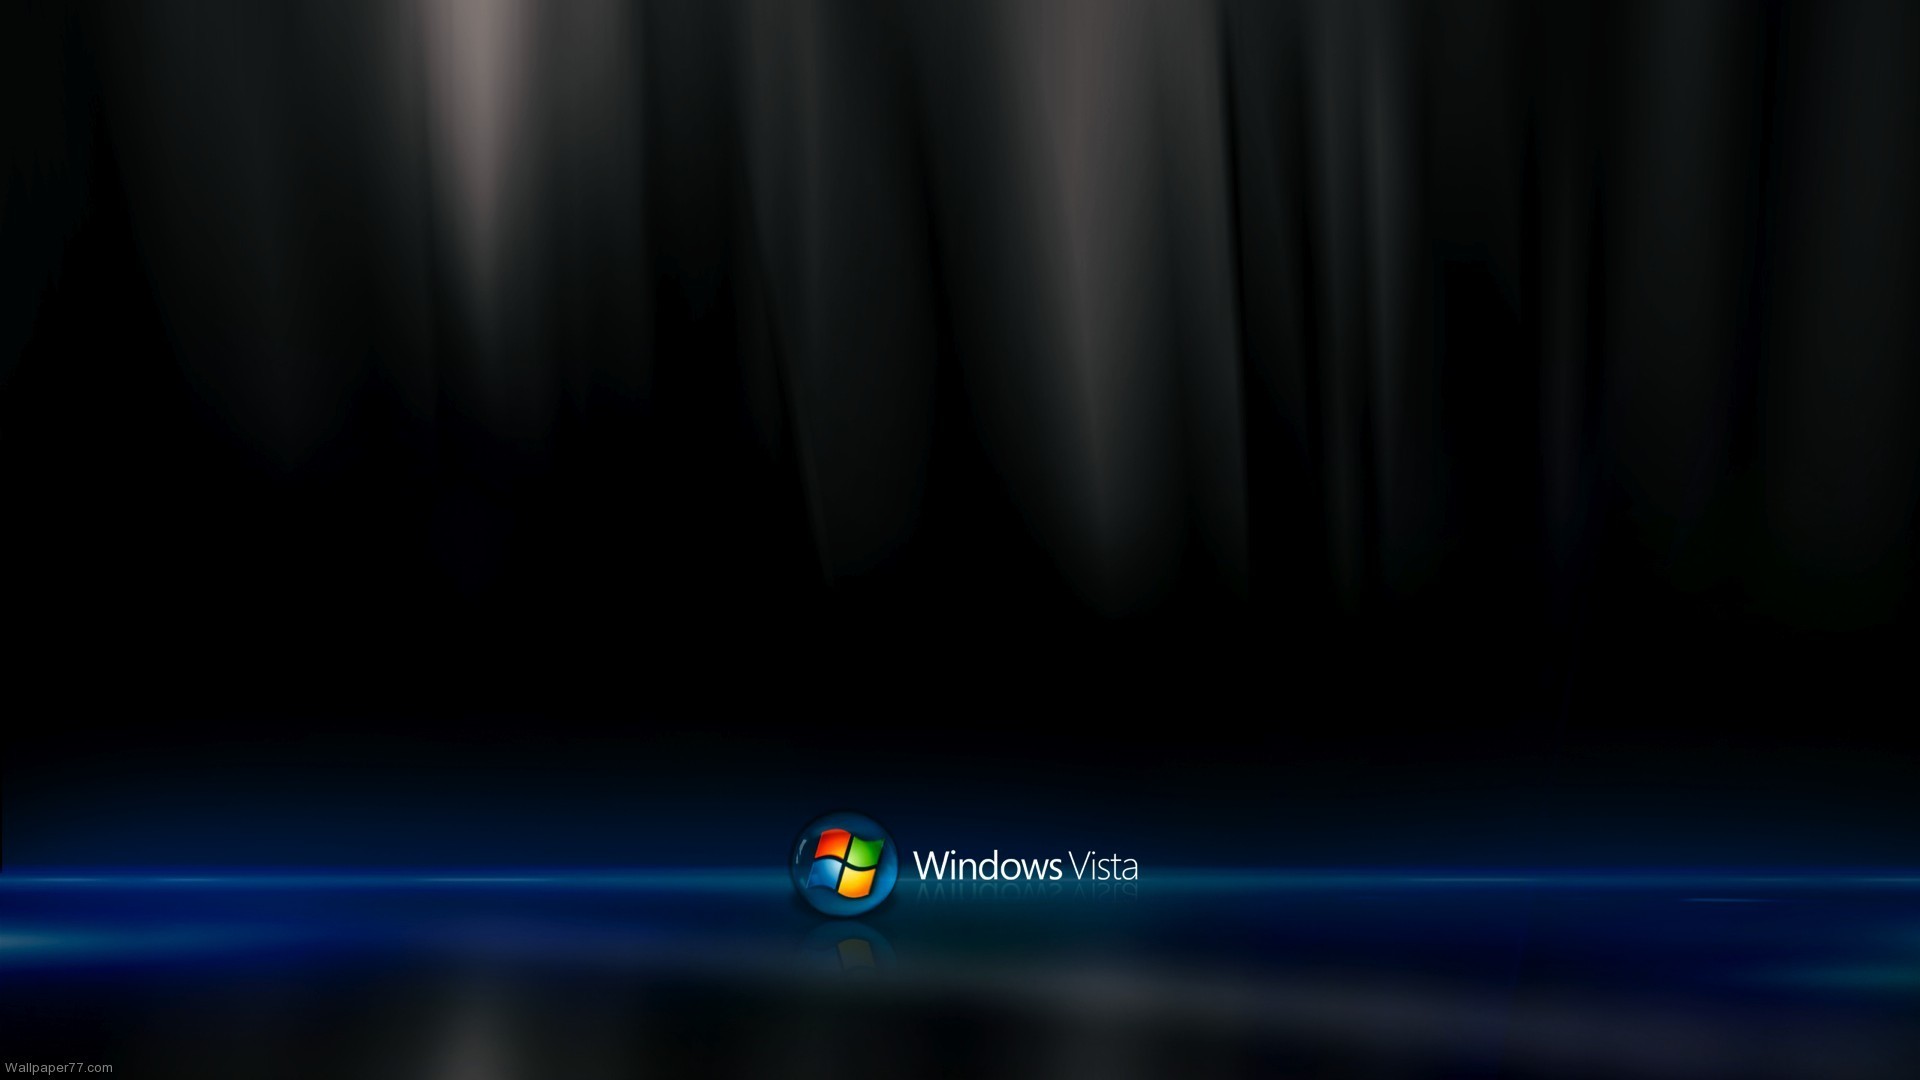 Windows Vista Wallpaper Source A Windows Vista Wallpaper Hd 19x1080 Wallpaper Teahub Io